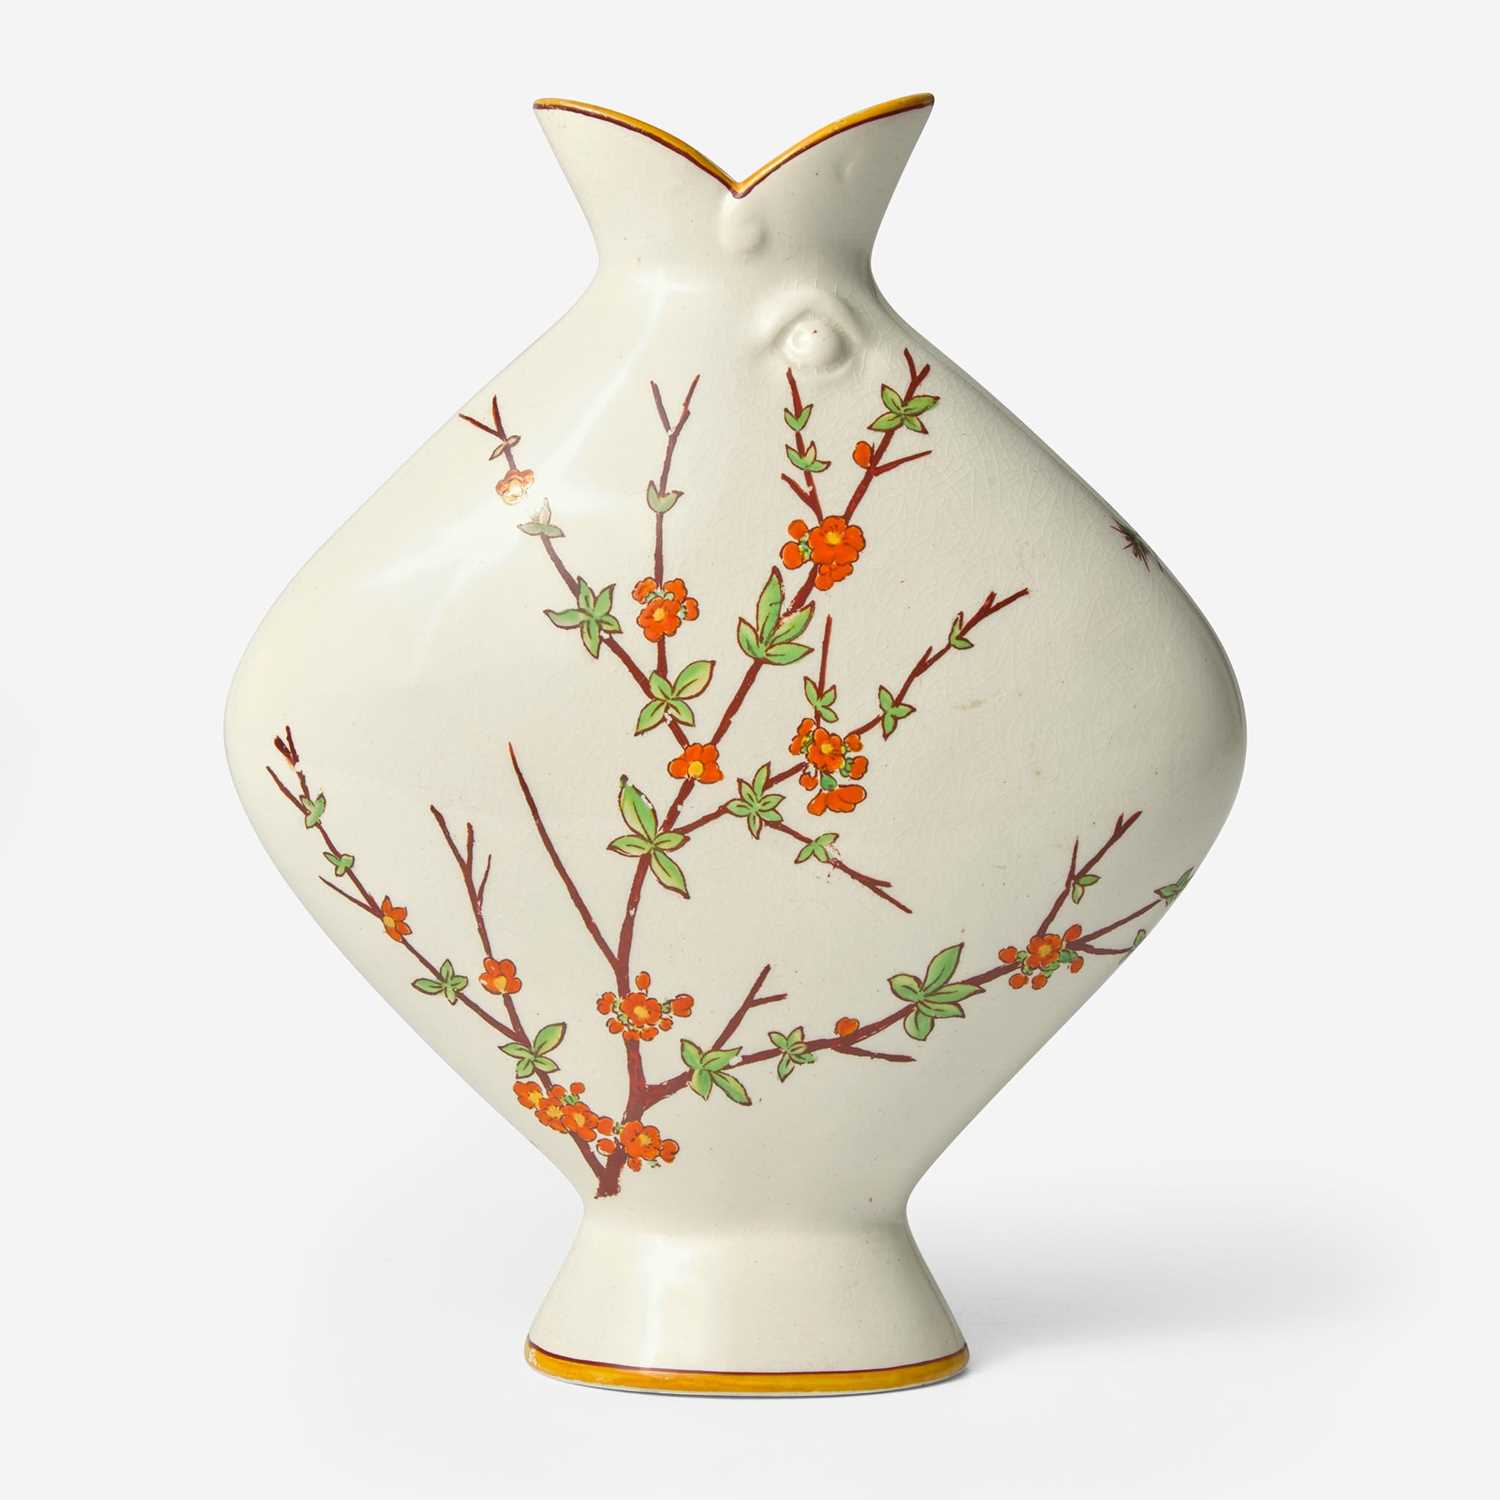 Lot 144 - A Wedgwood Christopher Dresser (1834-1904) Designed Queensware Fish Vase